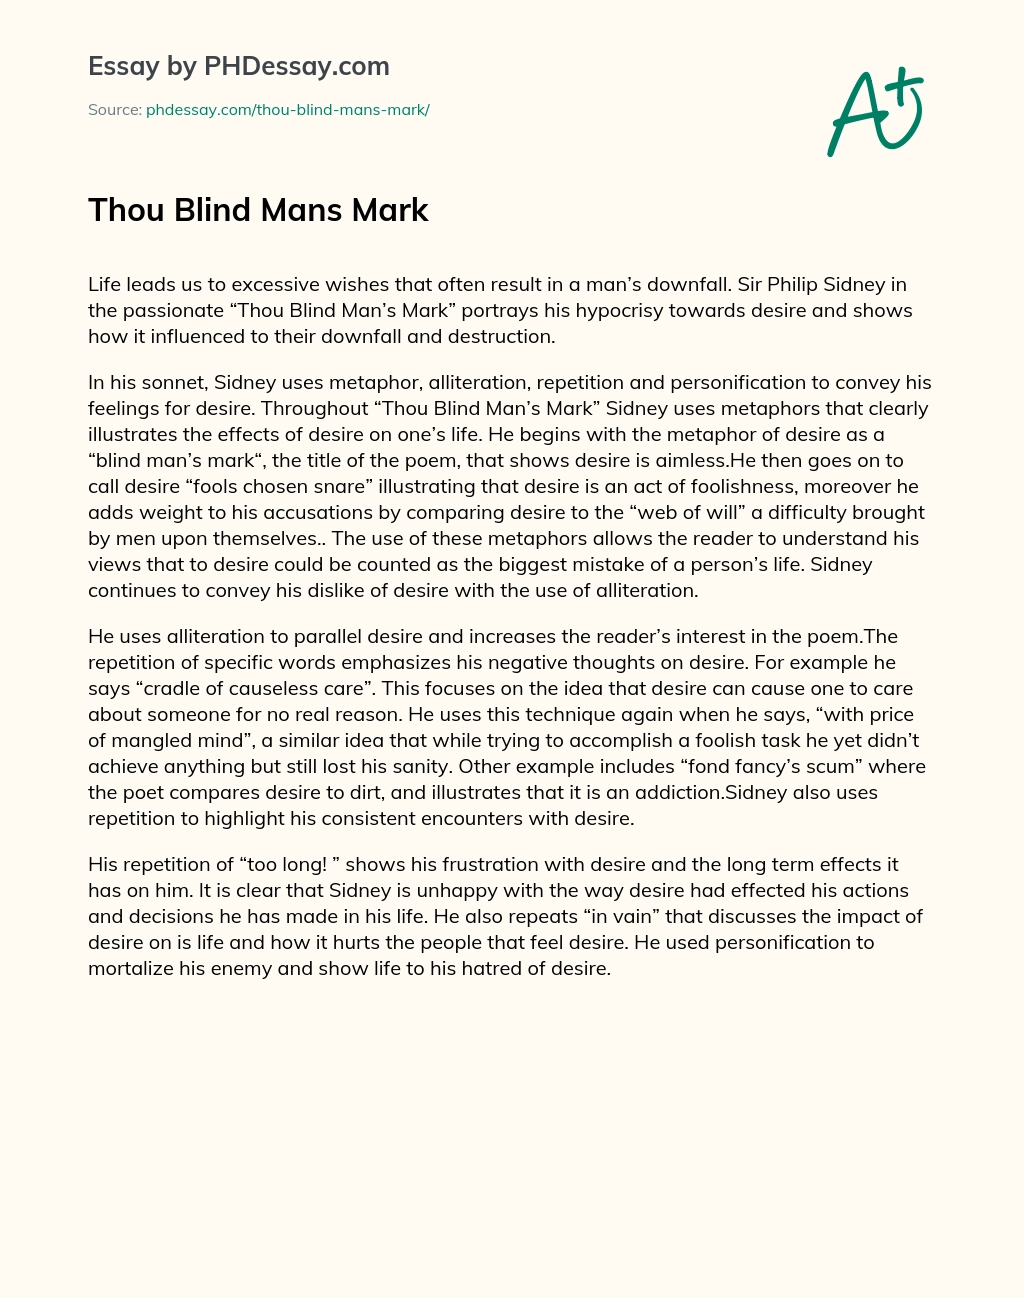 Thou Blind Mans Mark essay